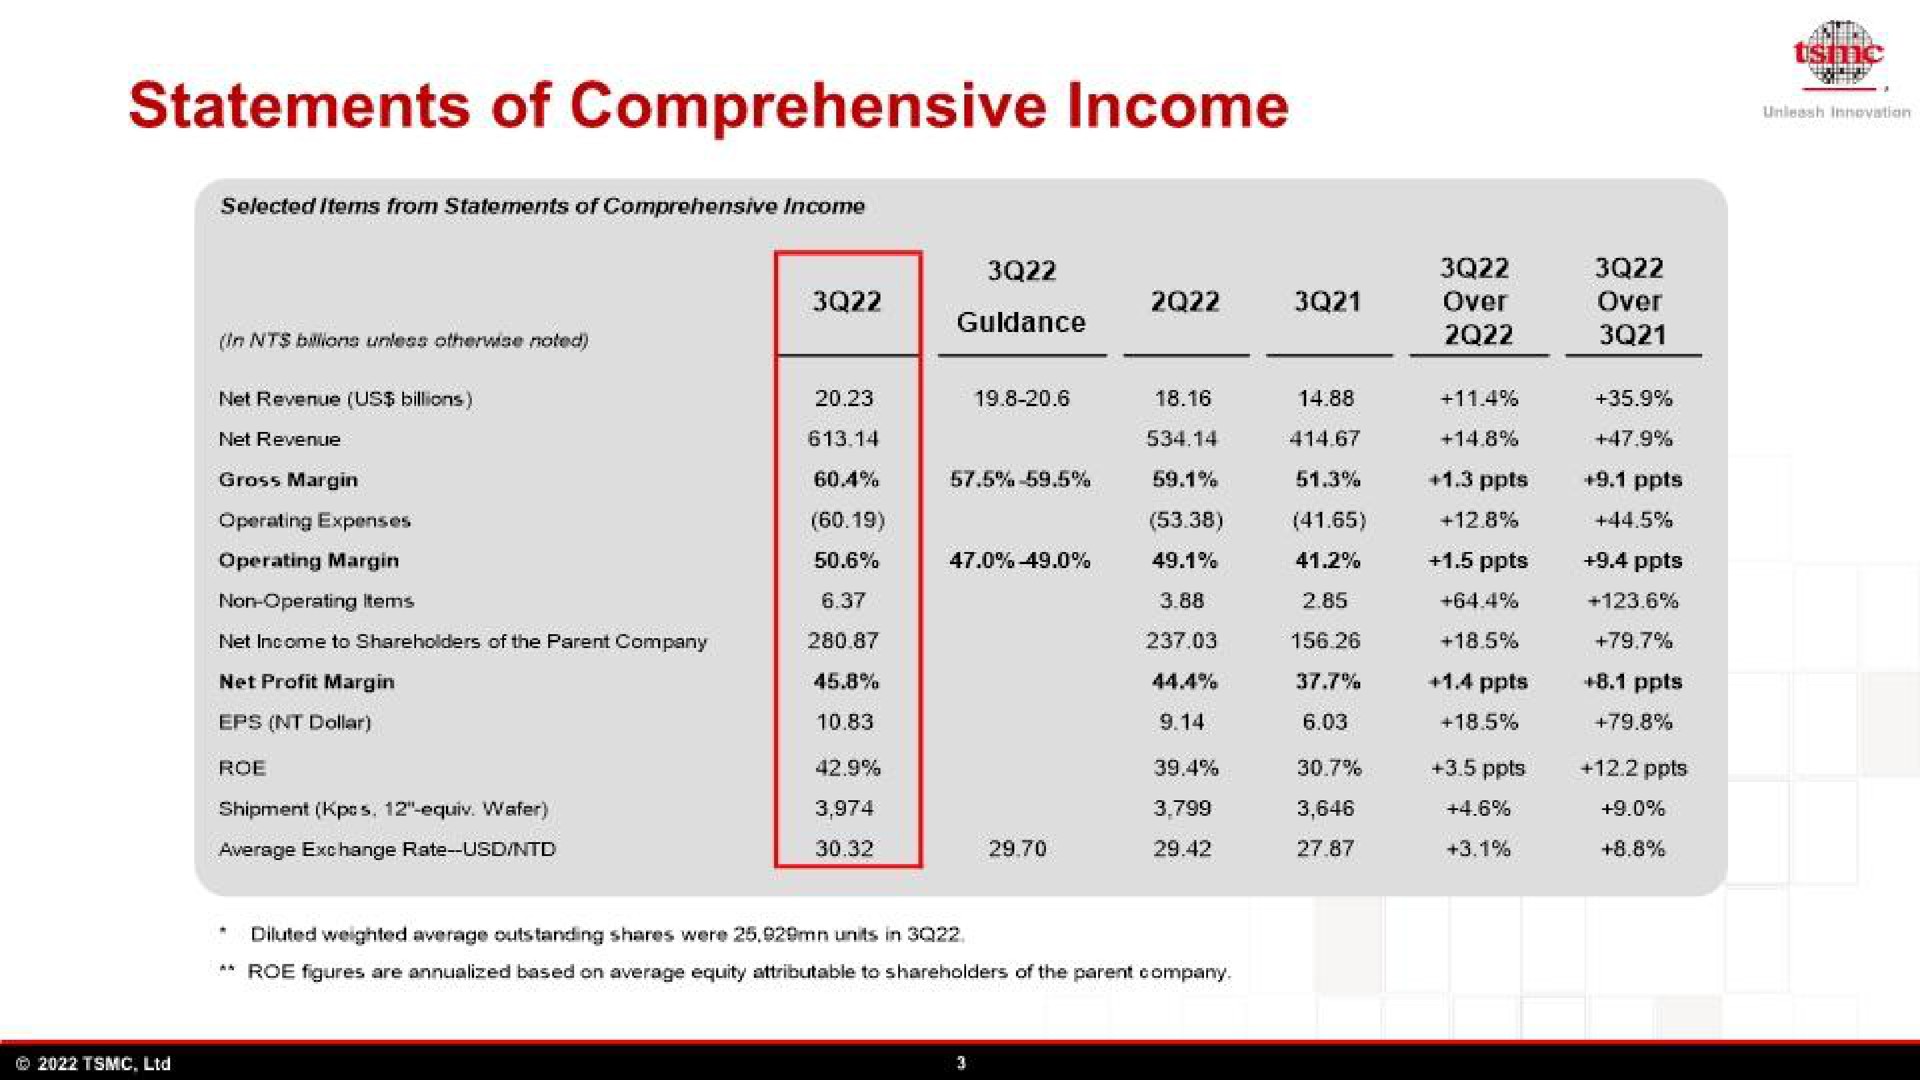 statements of comprehensive income | TSMC